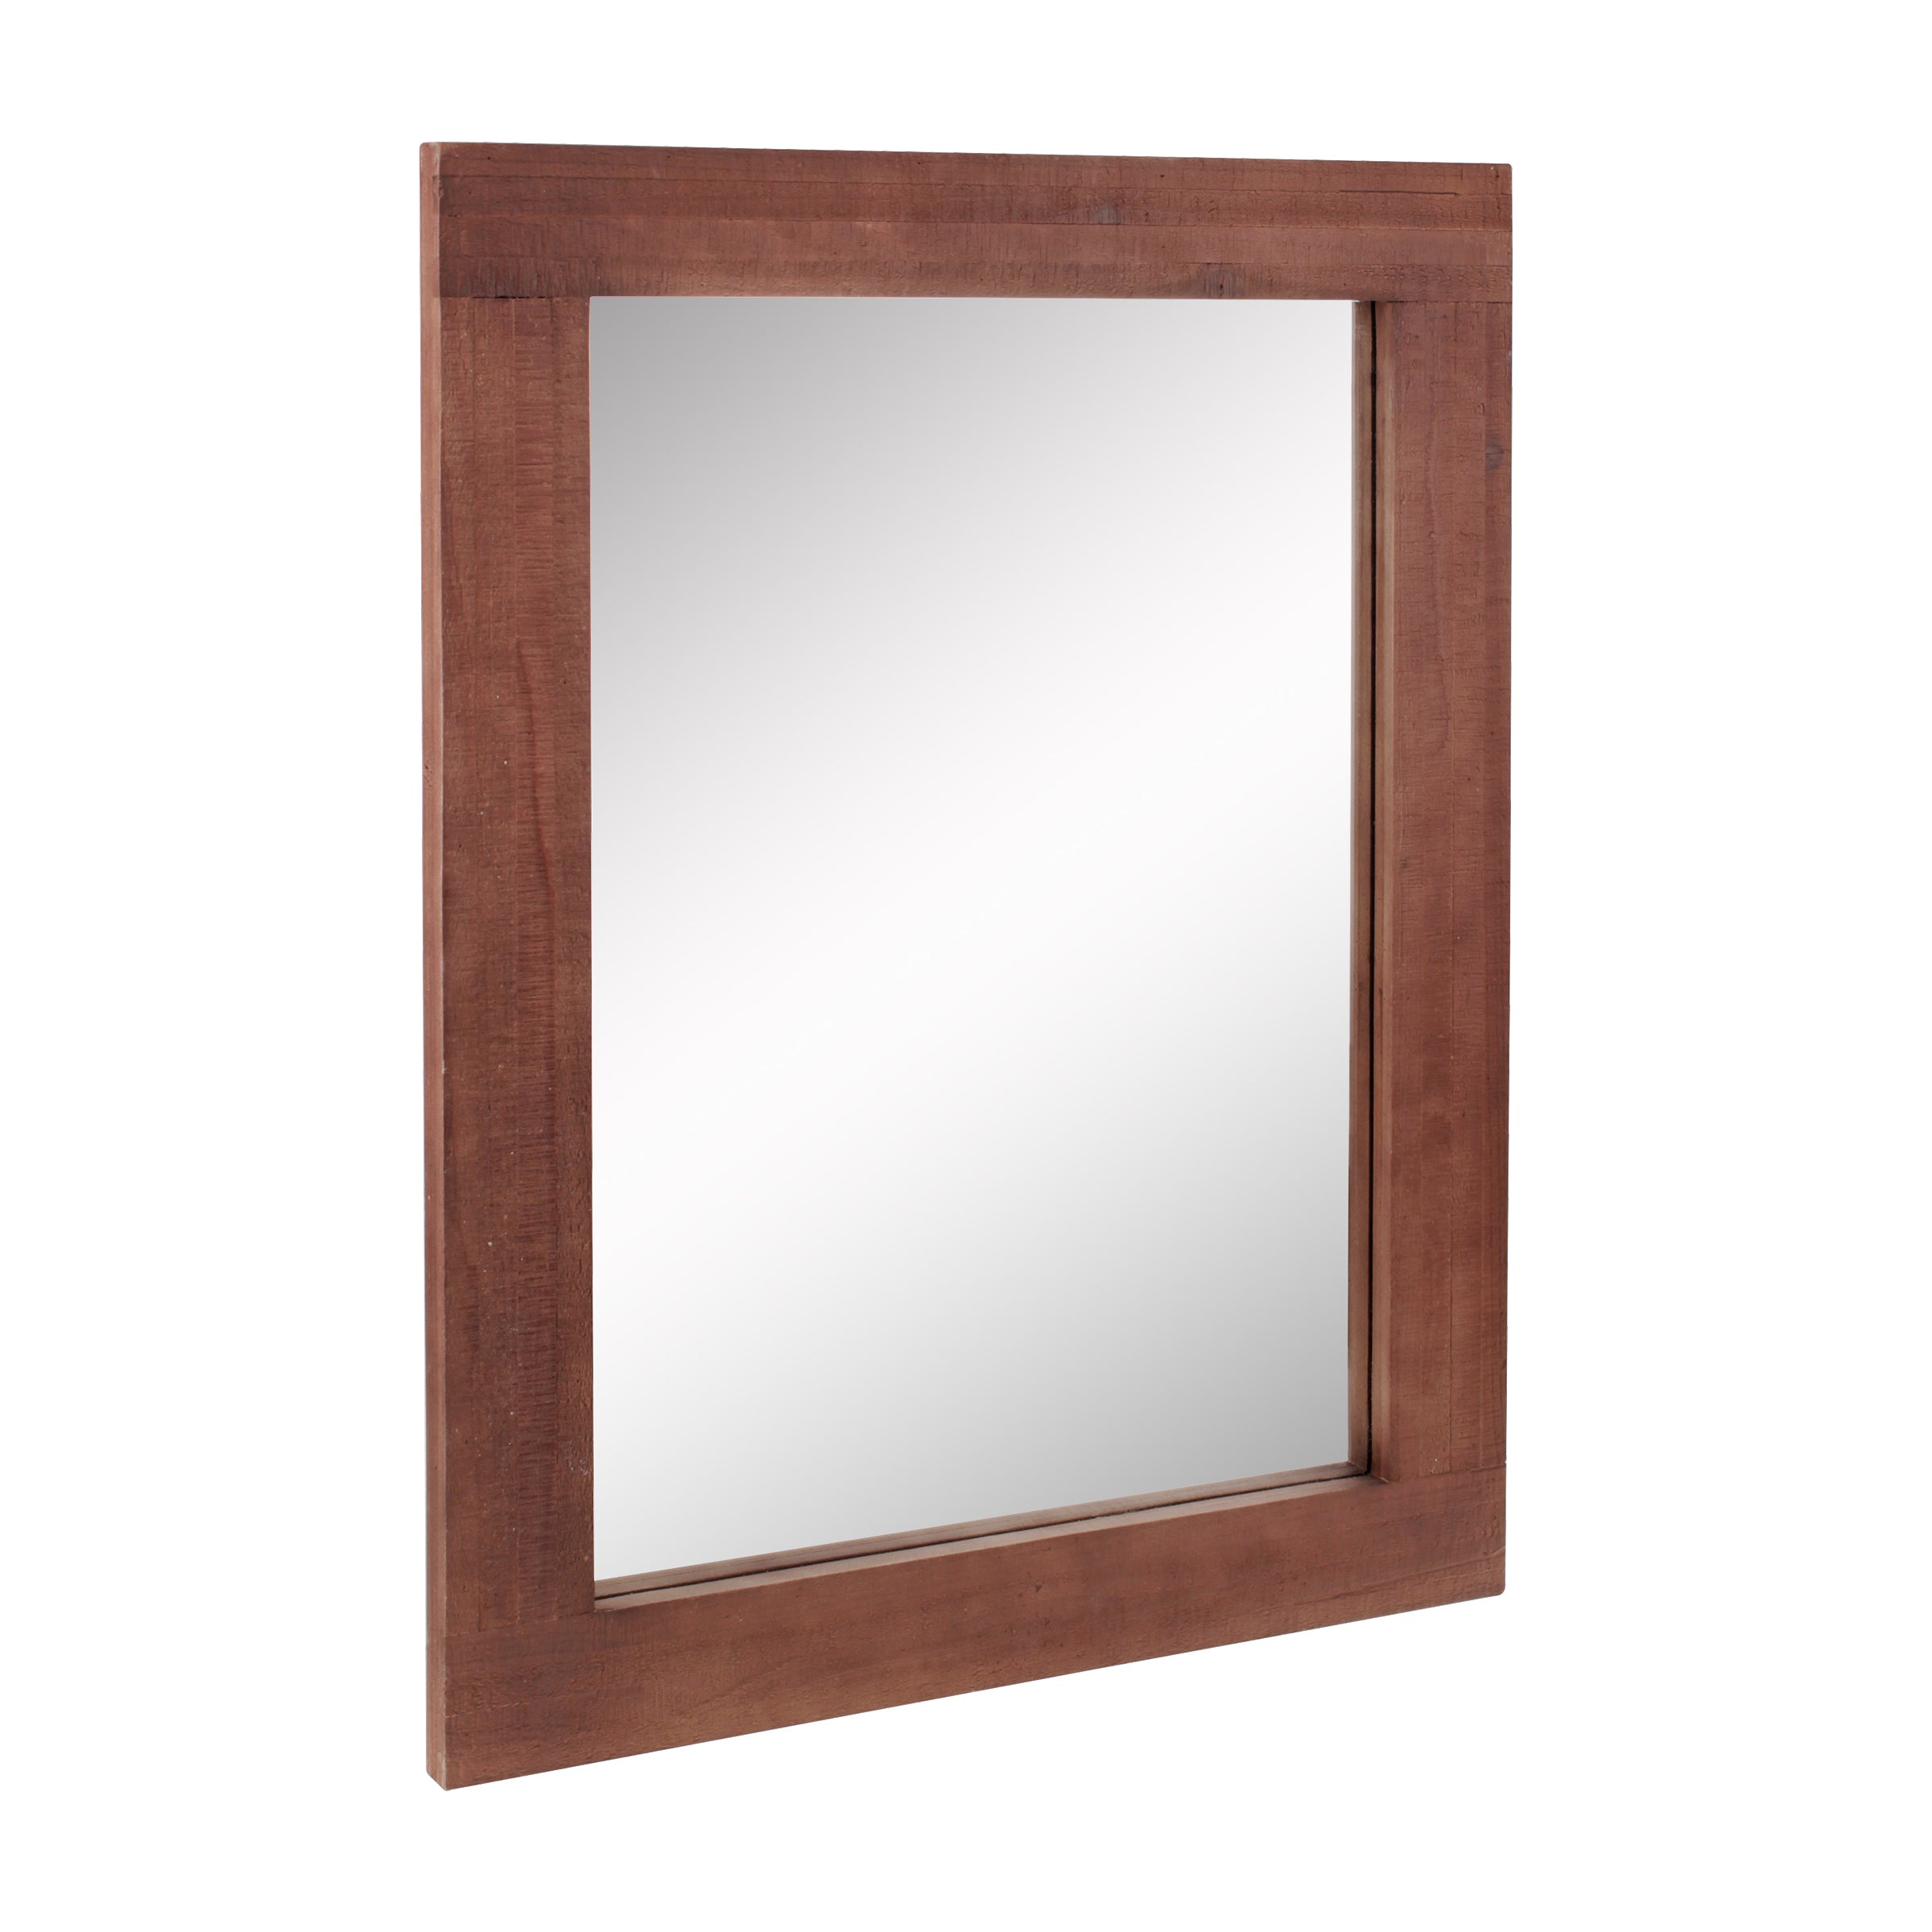 Rustic Rectangular Redwood Wooden Frame Hanging Wall Mirror